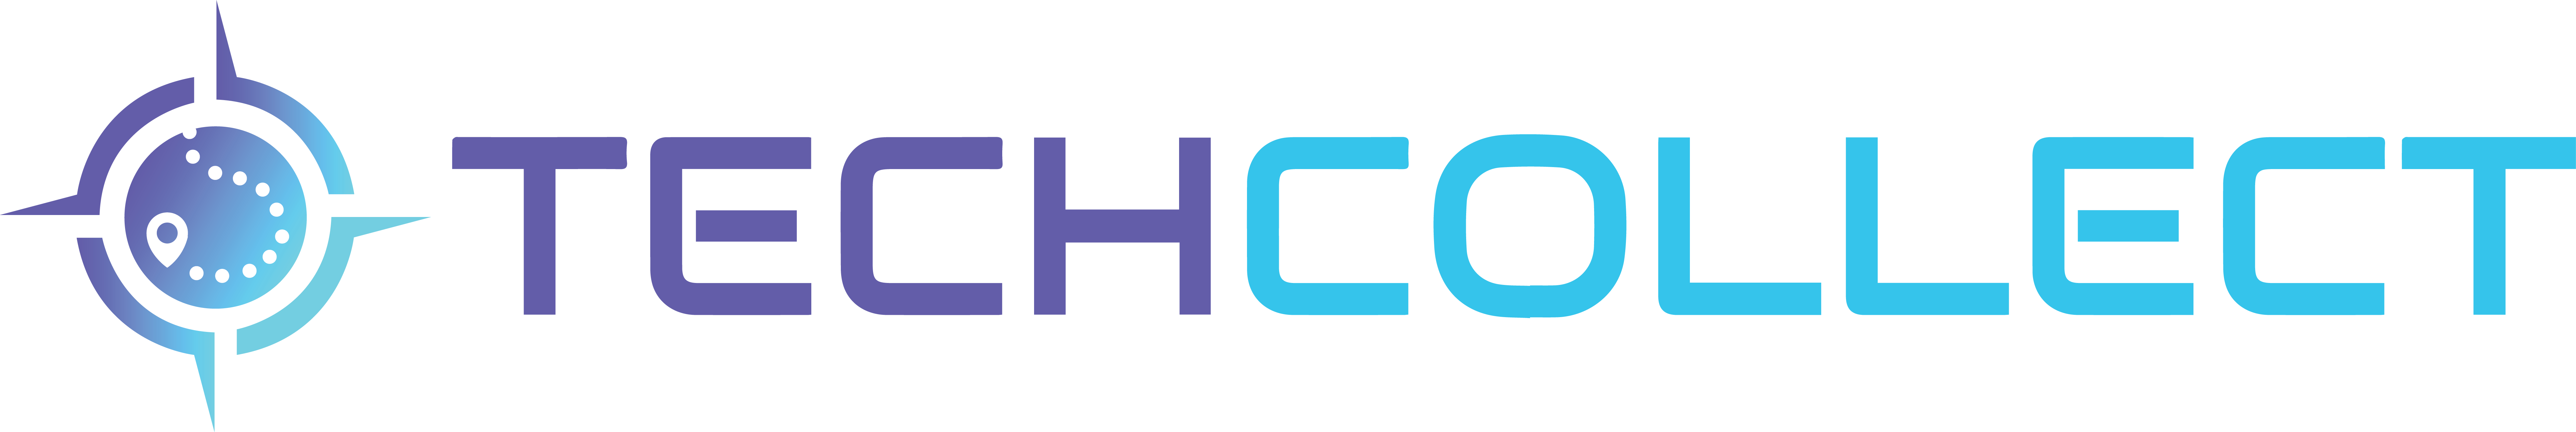 TechCollect_Purple-Aqua_Full Logo